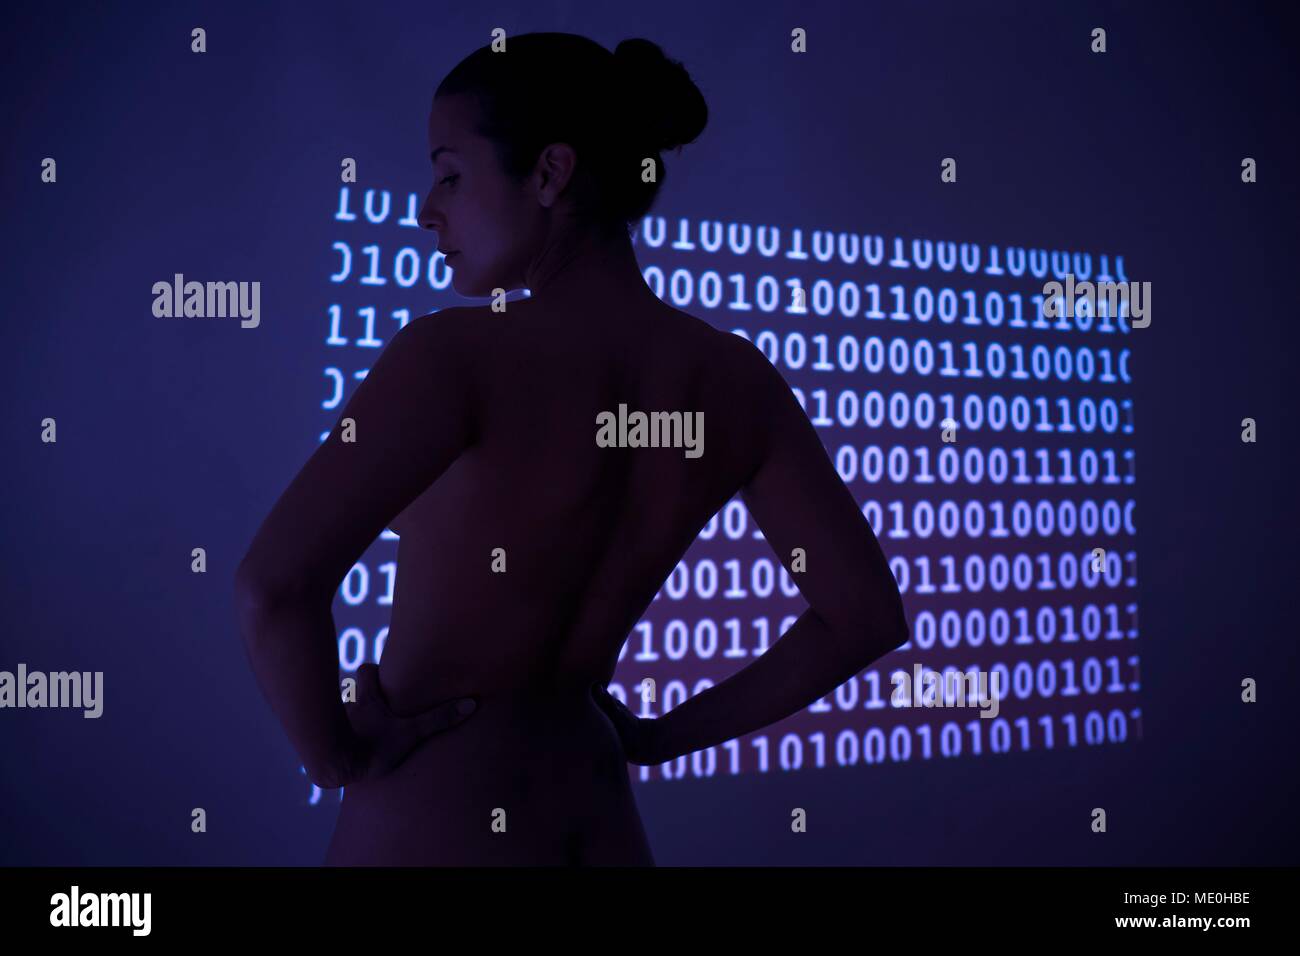 Woman with binary code. Stock Photo